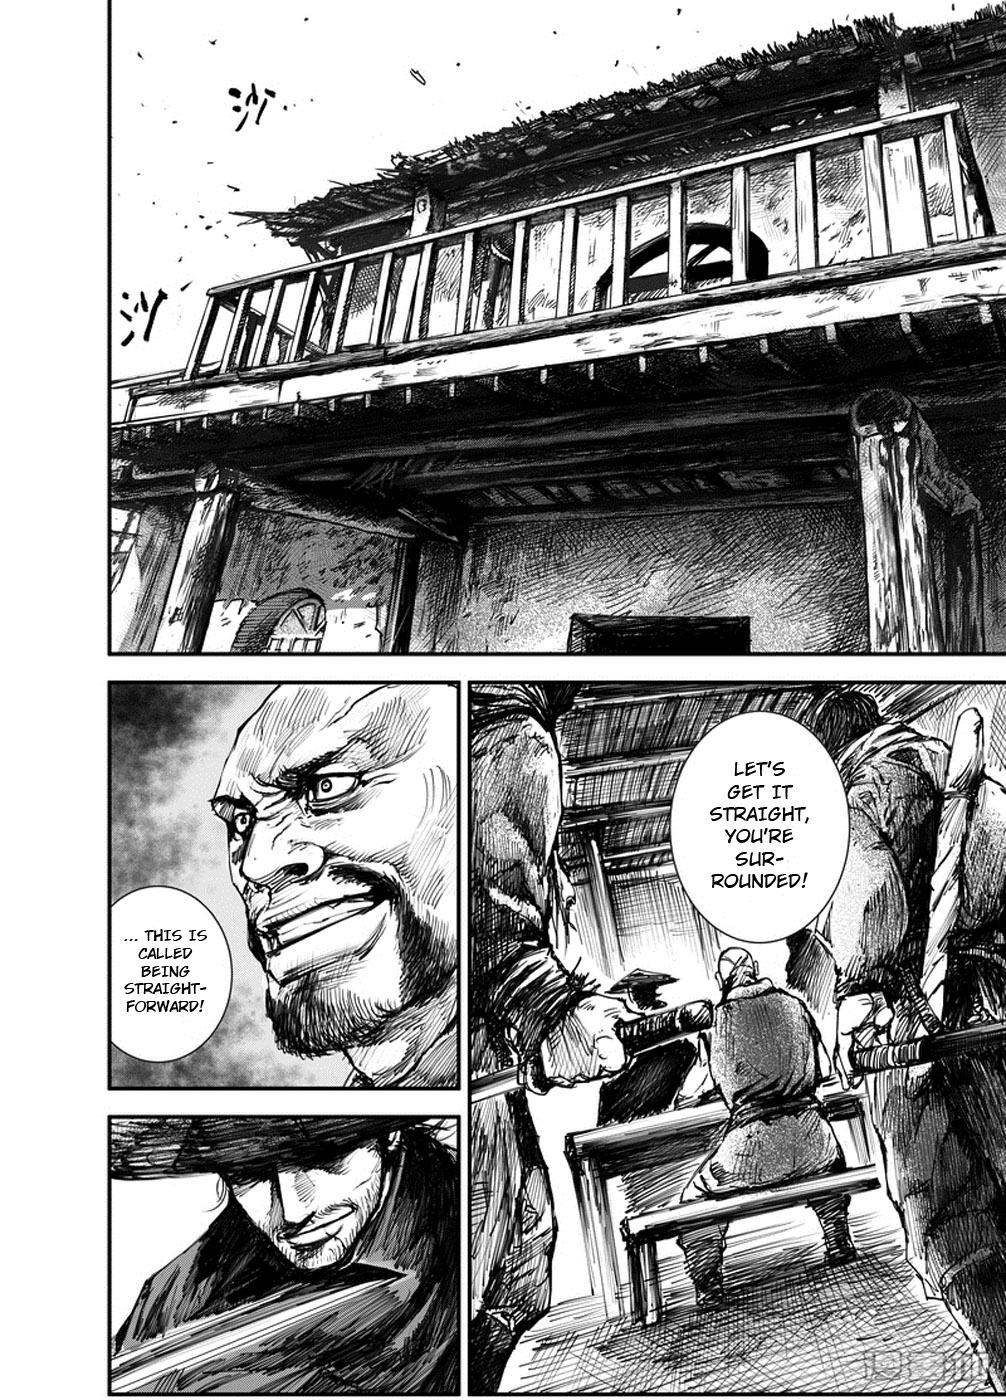 Read Blades Of The Guardians Manga Online Free - Manganelo